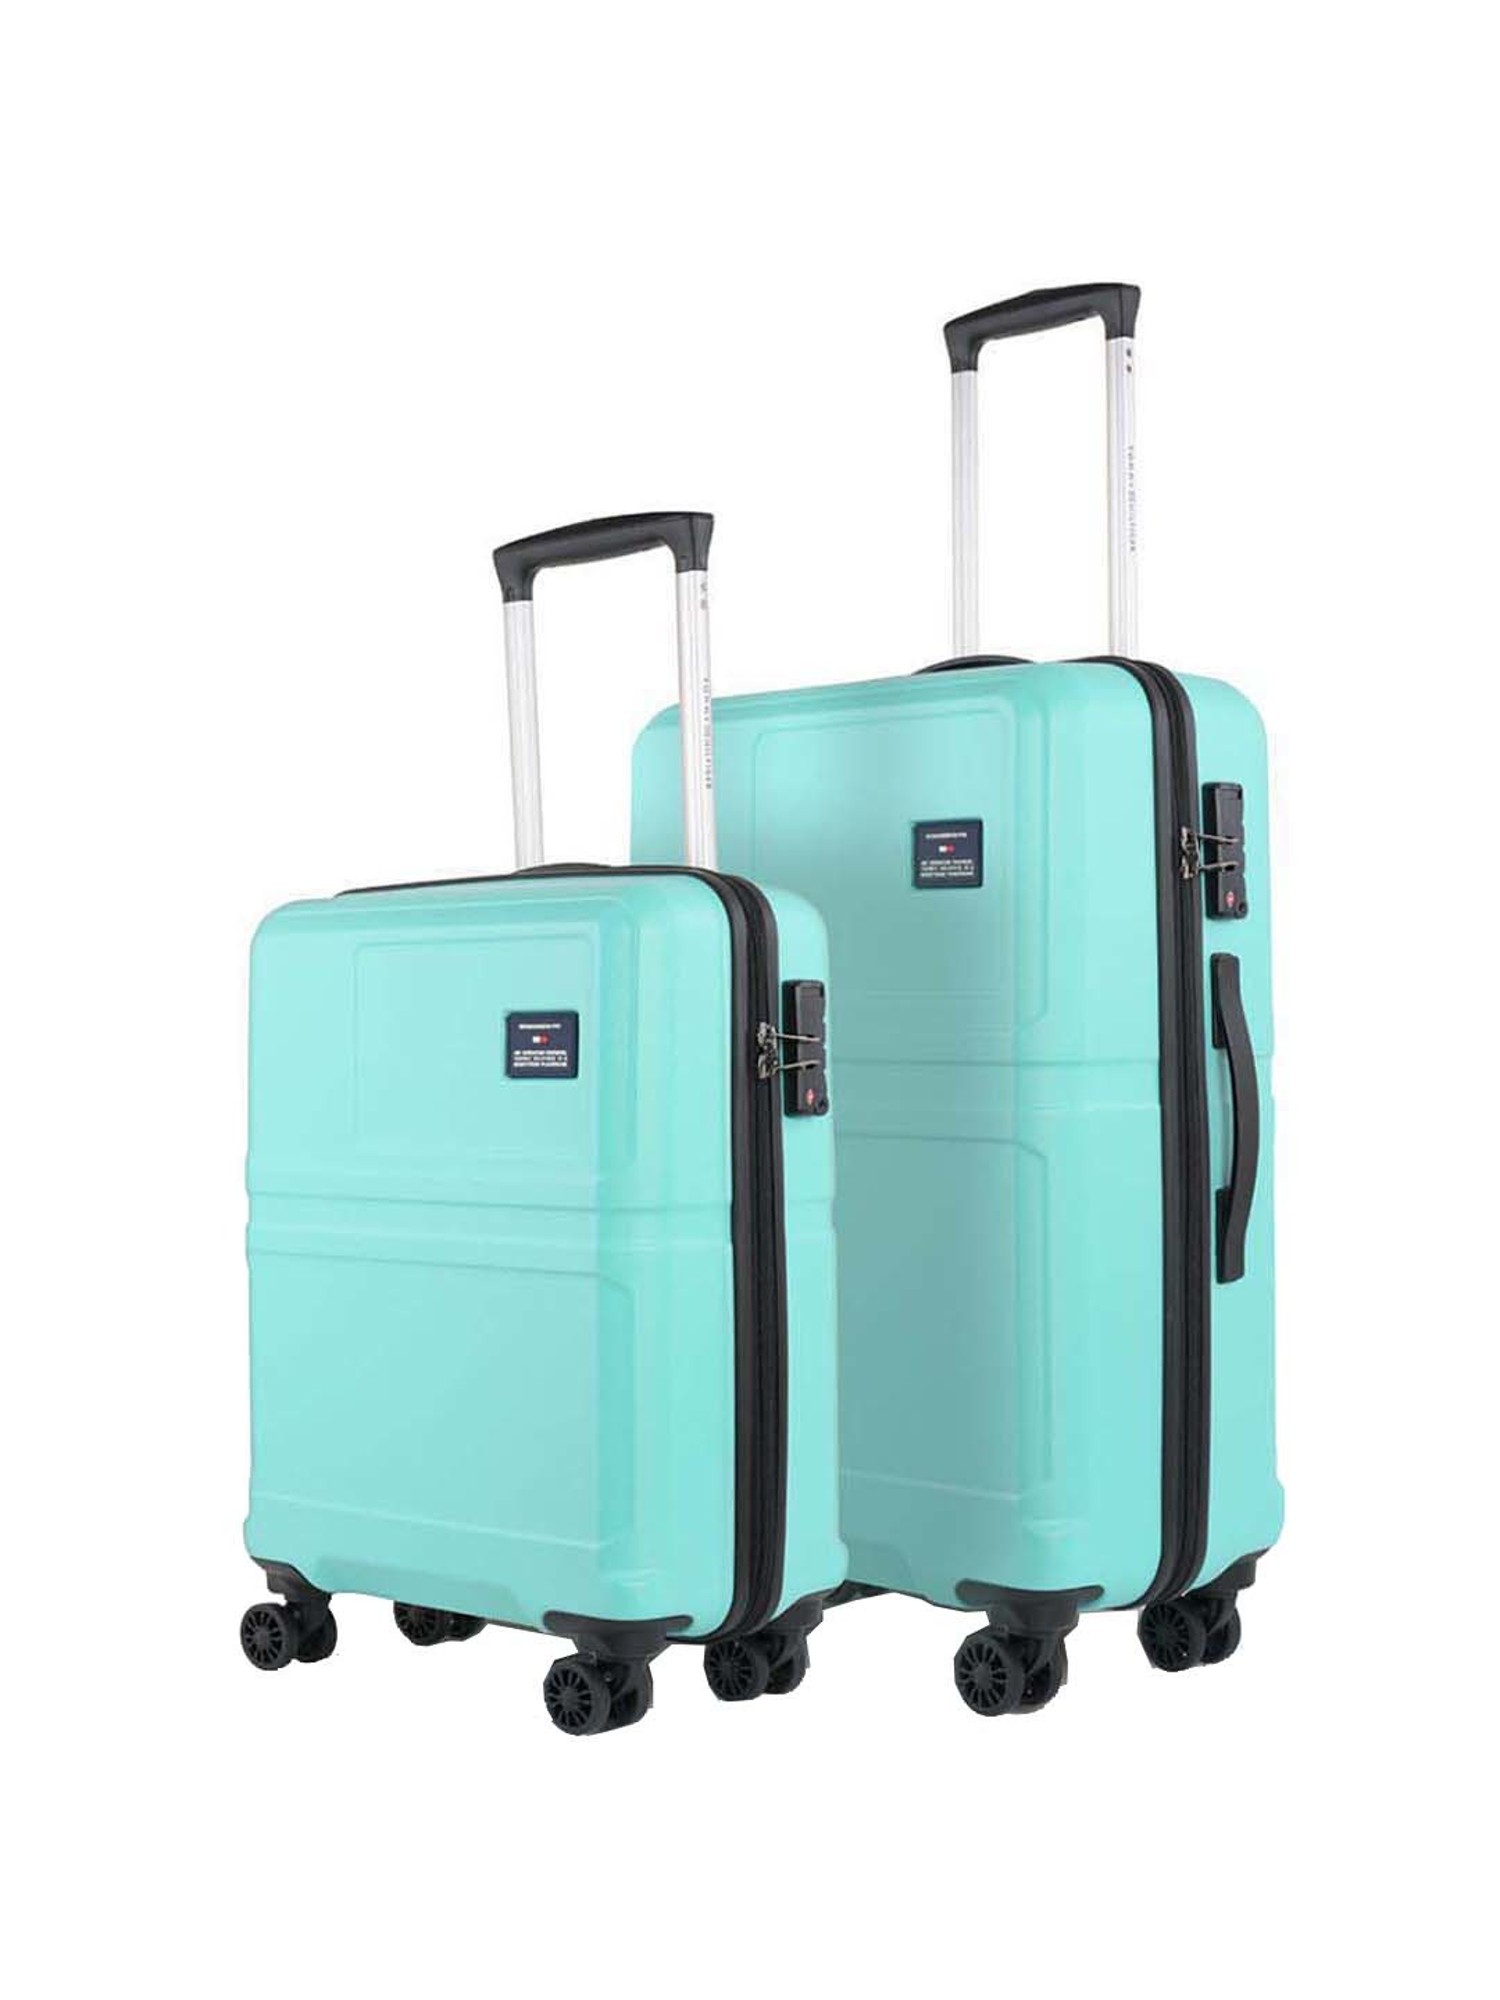 Alfa Crux Luggage Trolley Rs 600  Snapdealcom